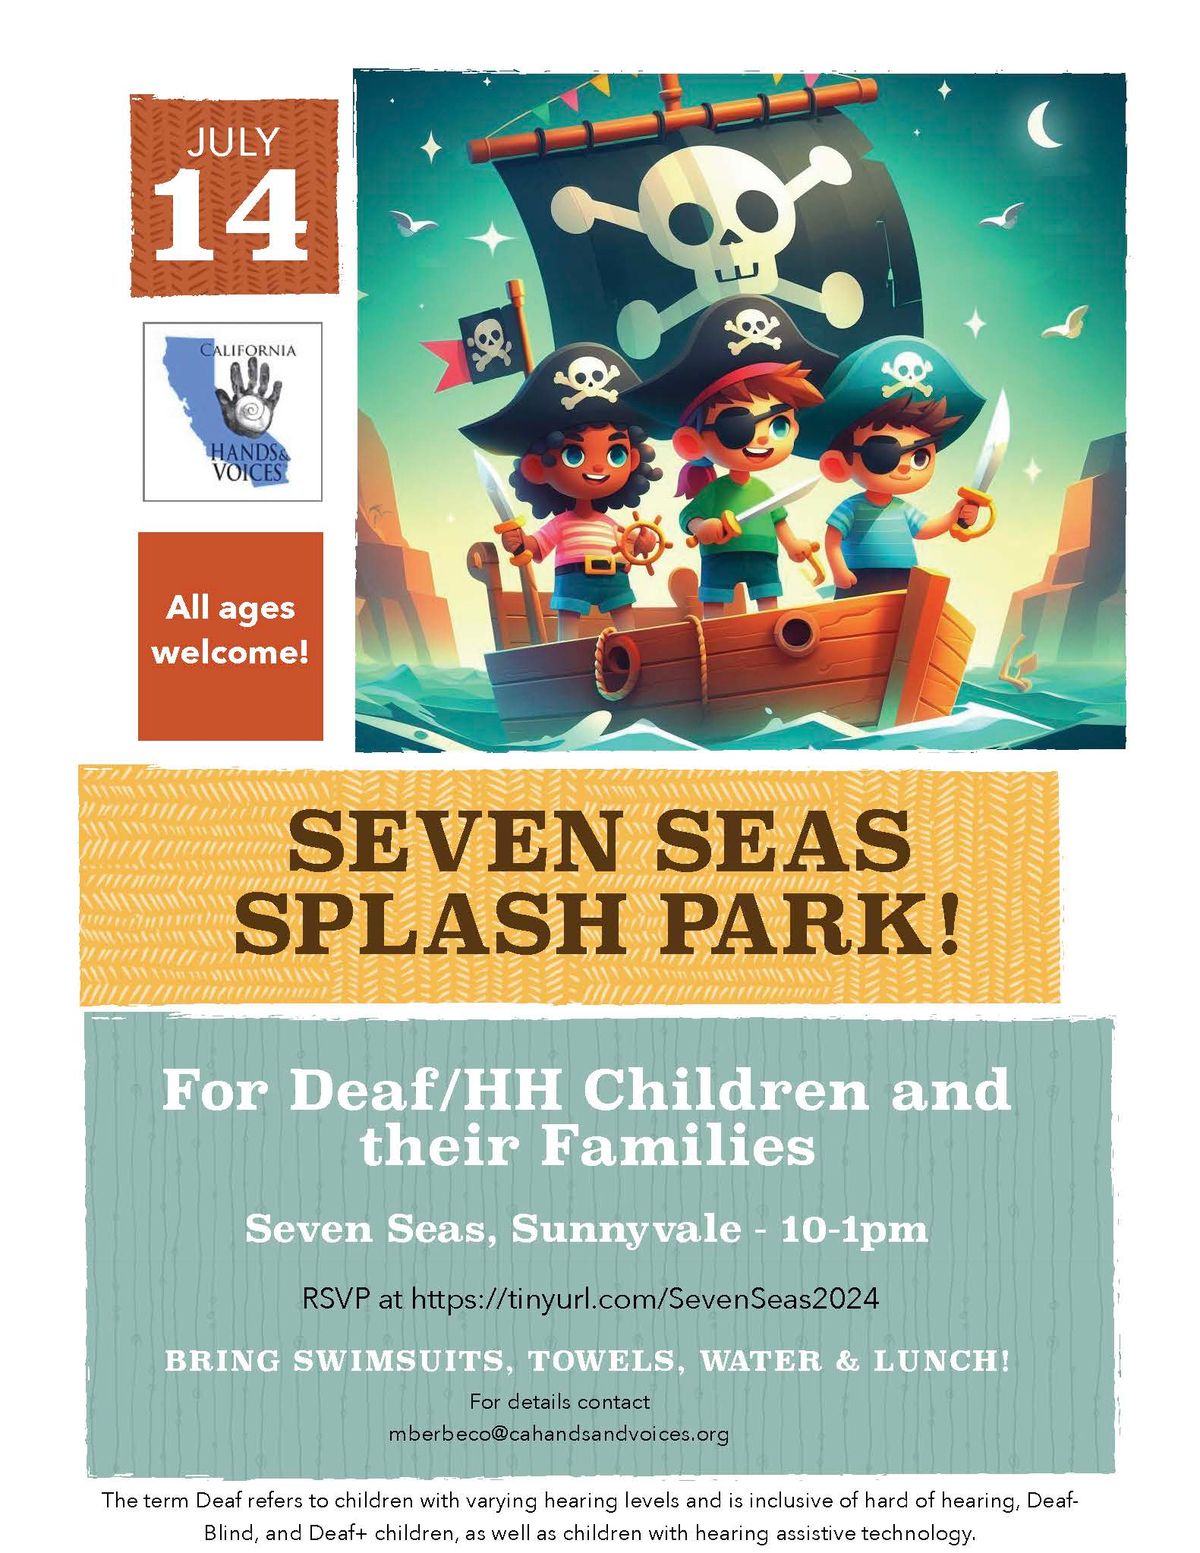 Seven Seas Splash Park, Sunnyvale